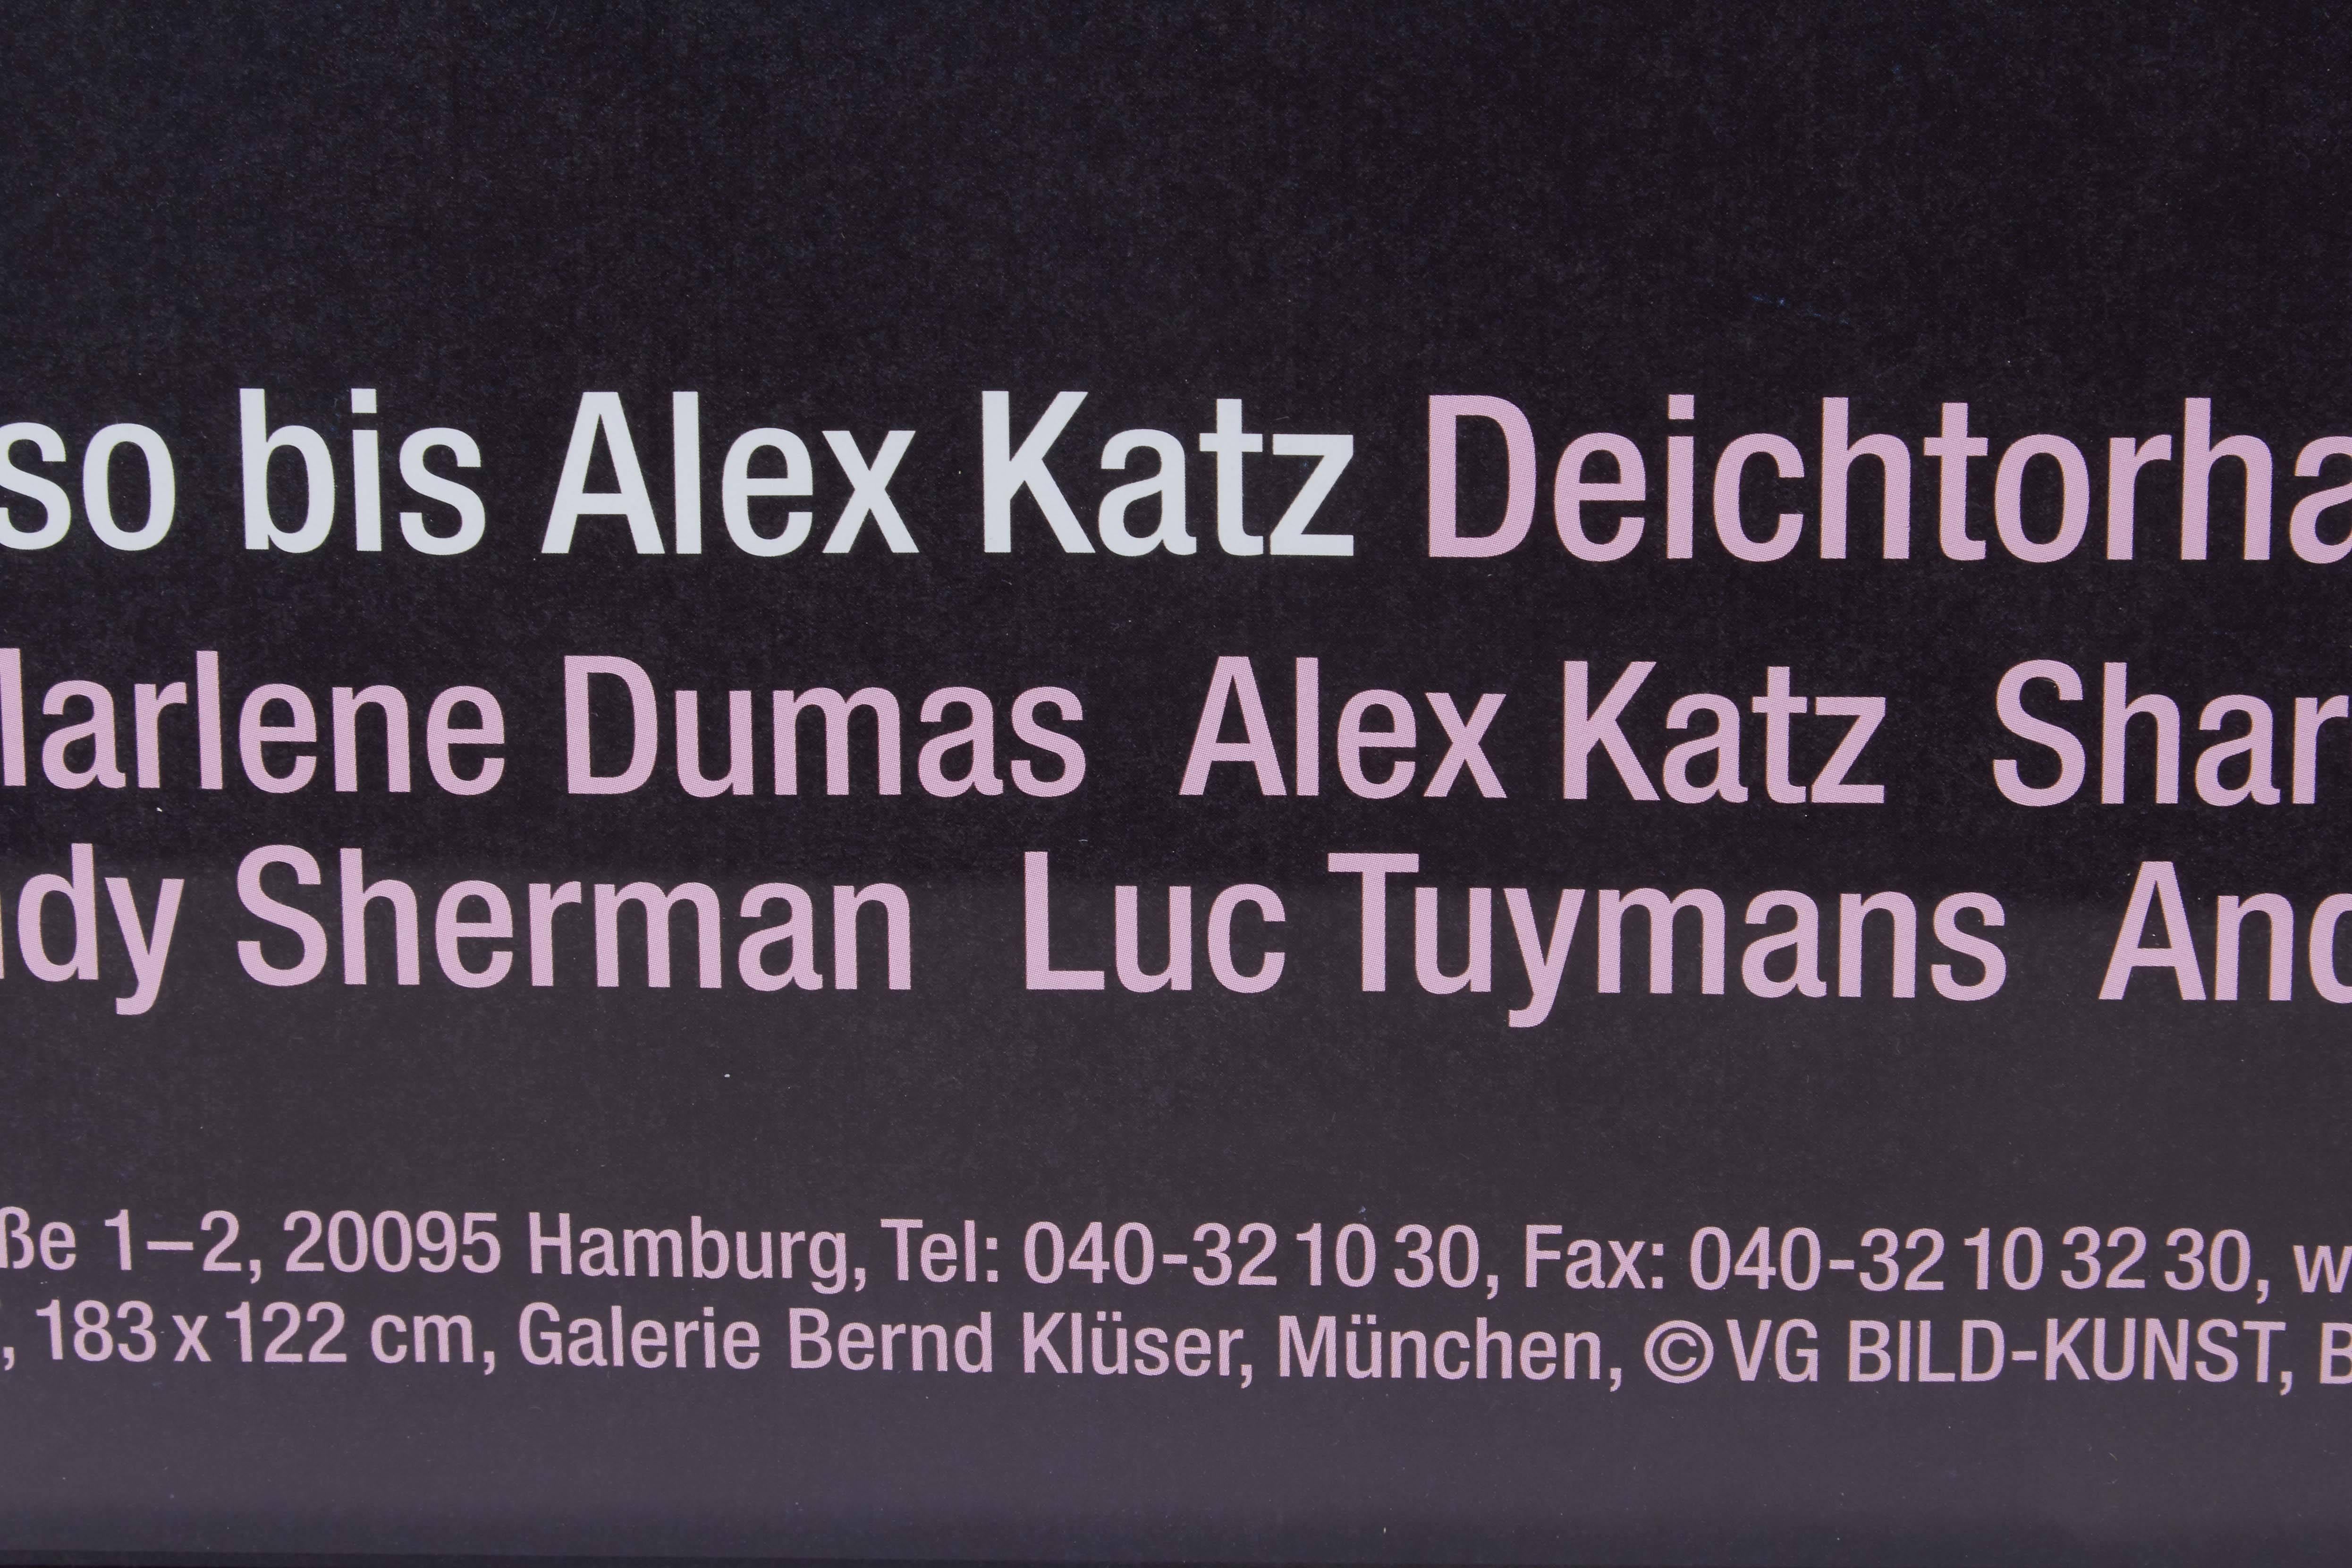 alex katz exhibition poster